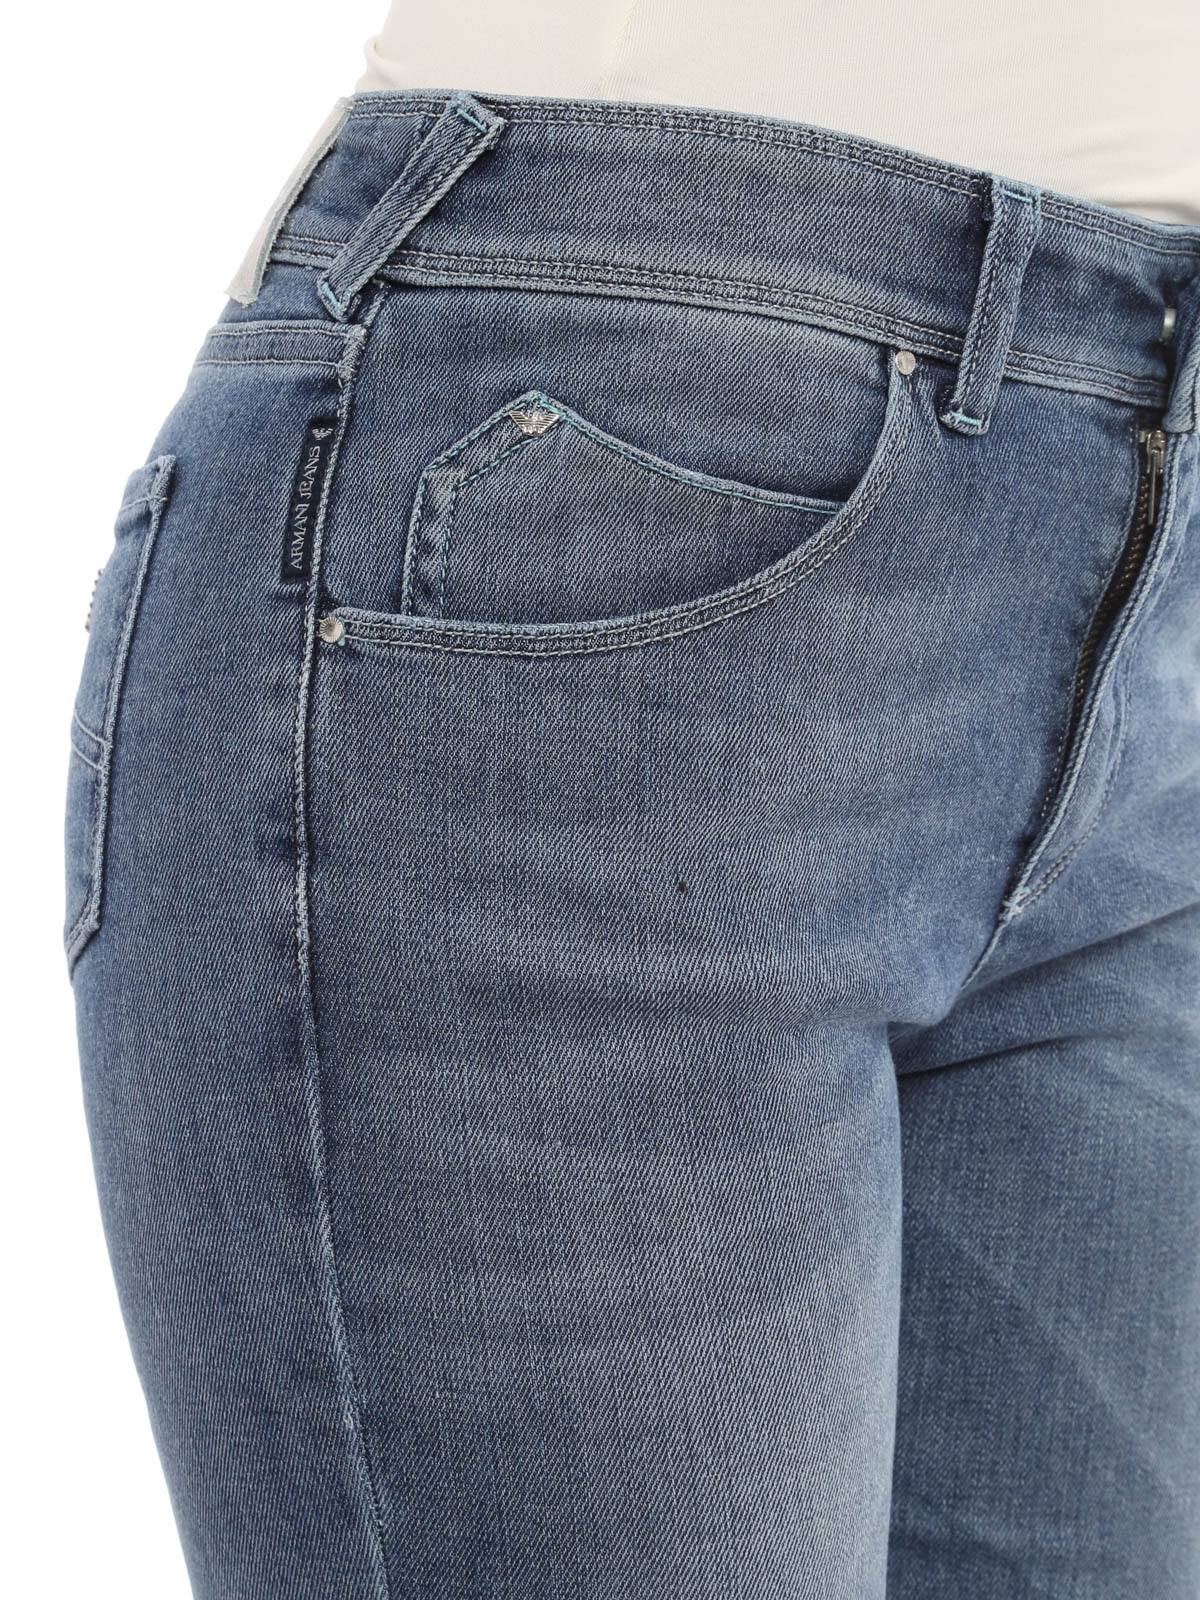 Marco Polo barsten uitgehongerd Skinny jeans Armani Jeans - Lilac jeans - C5J201D15 | Shop online at iKRIX